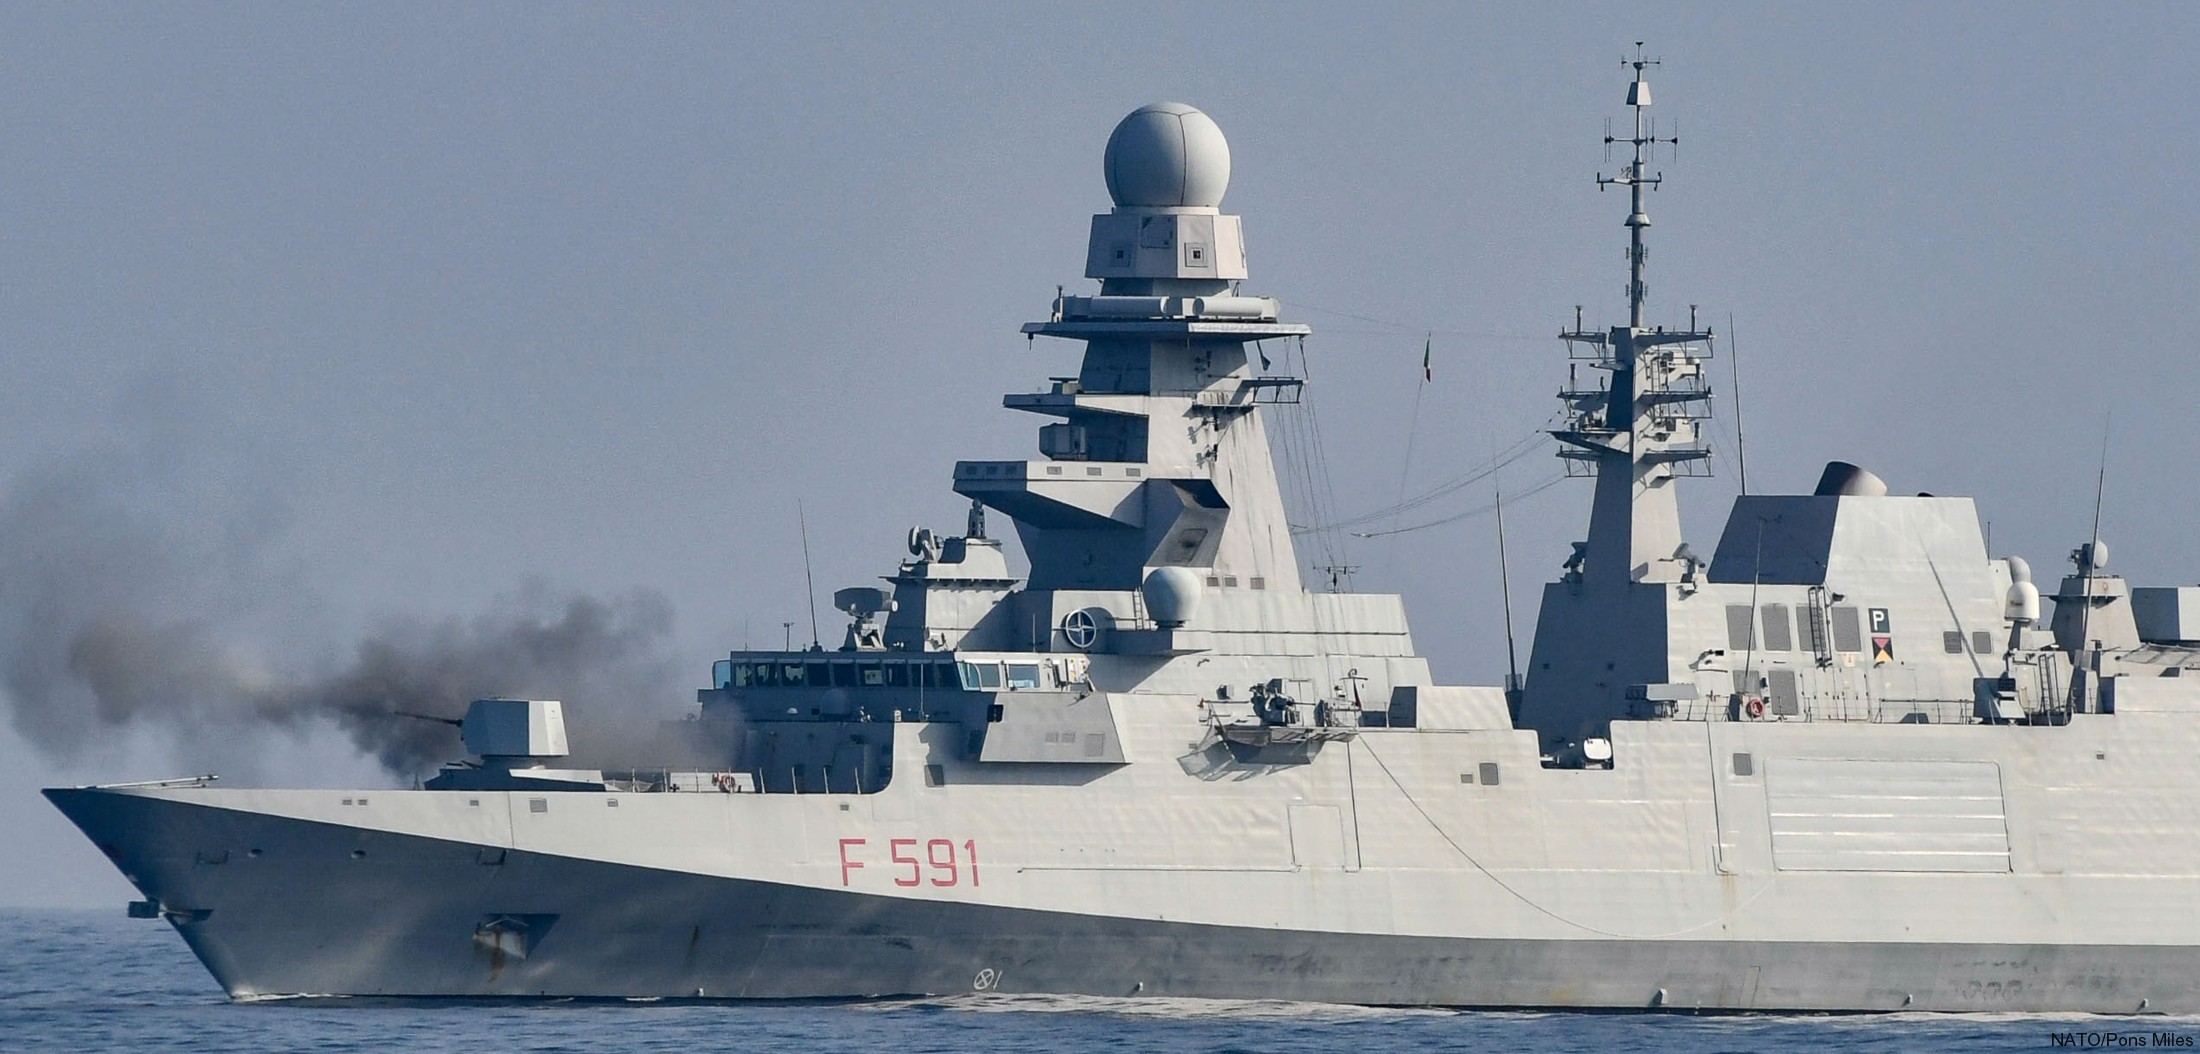 f-591 virginio fasan its nave bergamini fremm class guided missile frigate italian navy marina militare 58 nato snmg